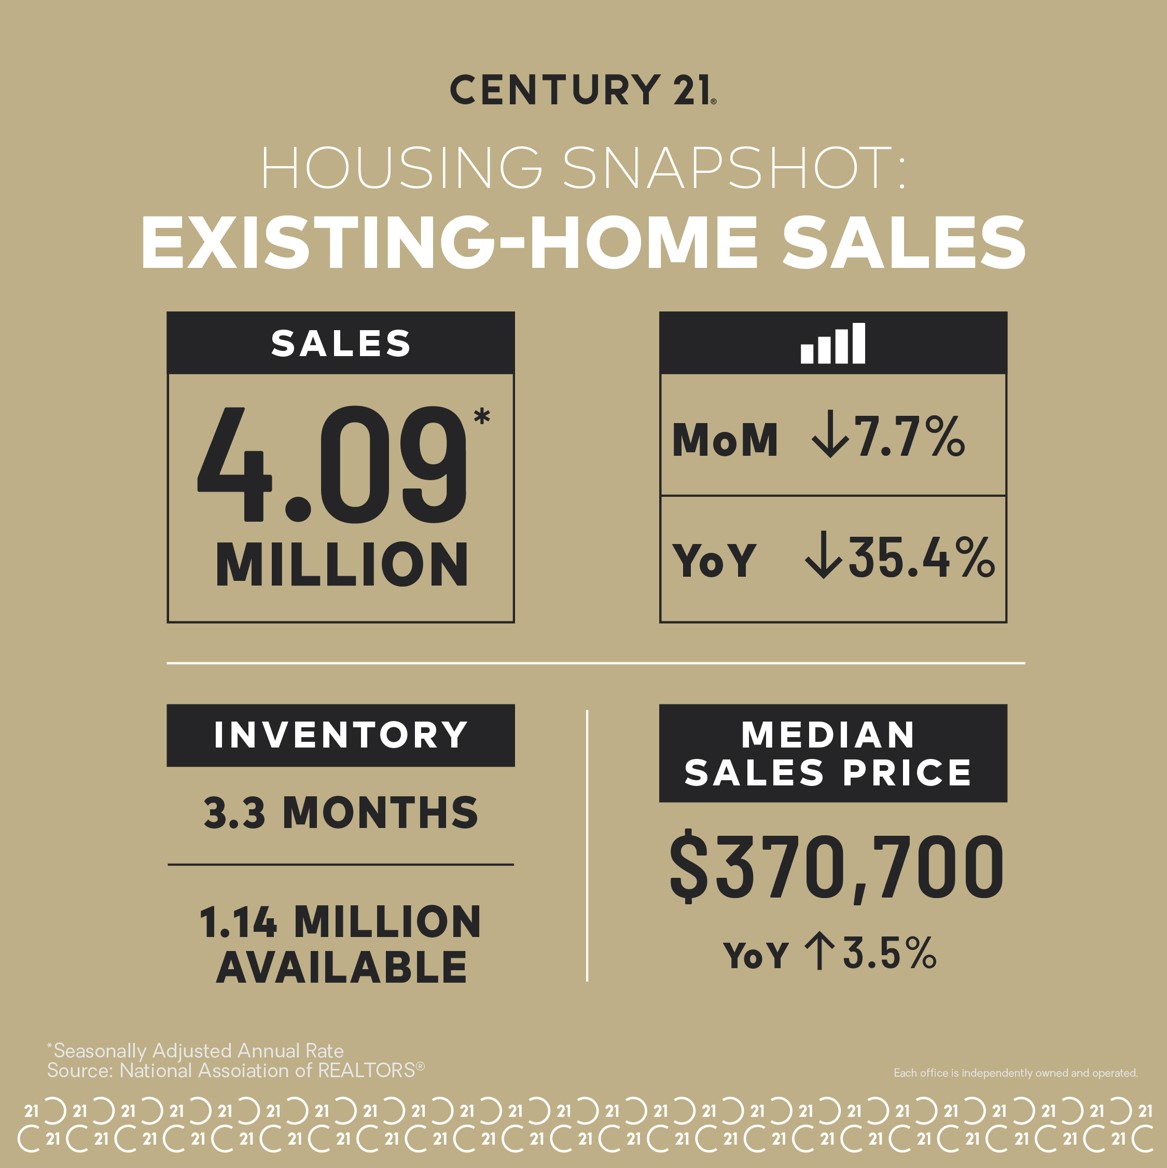 January Market Watch - Home Sales Decline, Seller's Market?